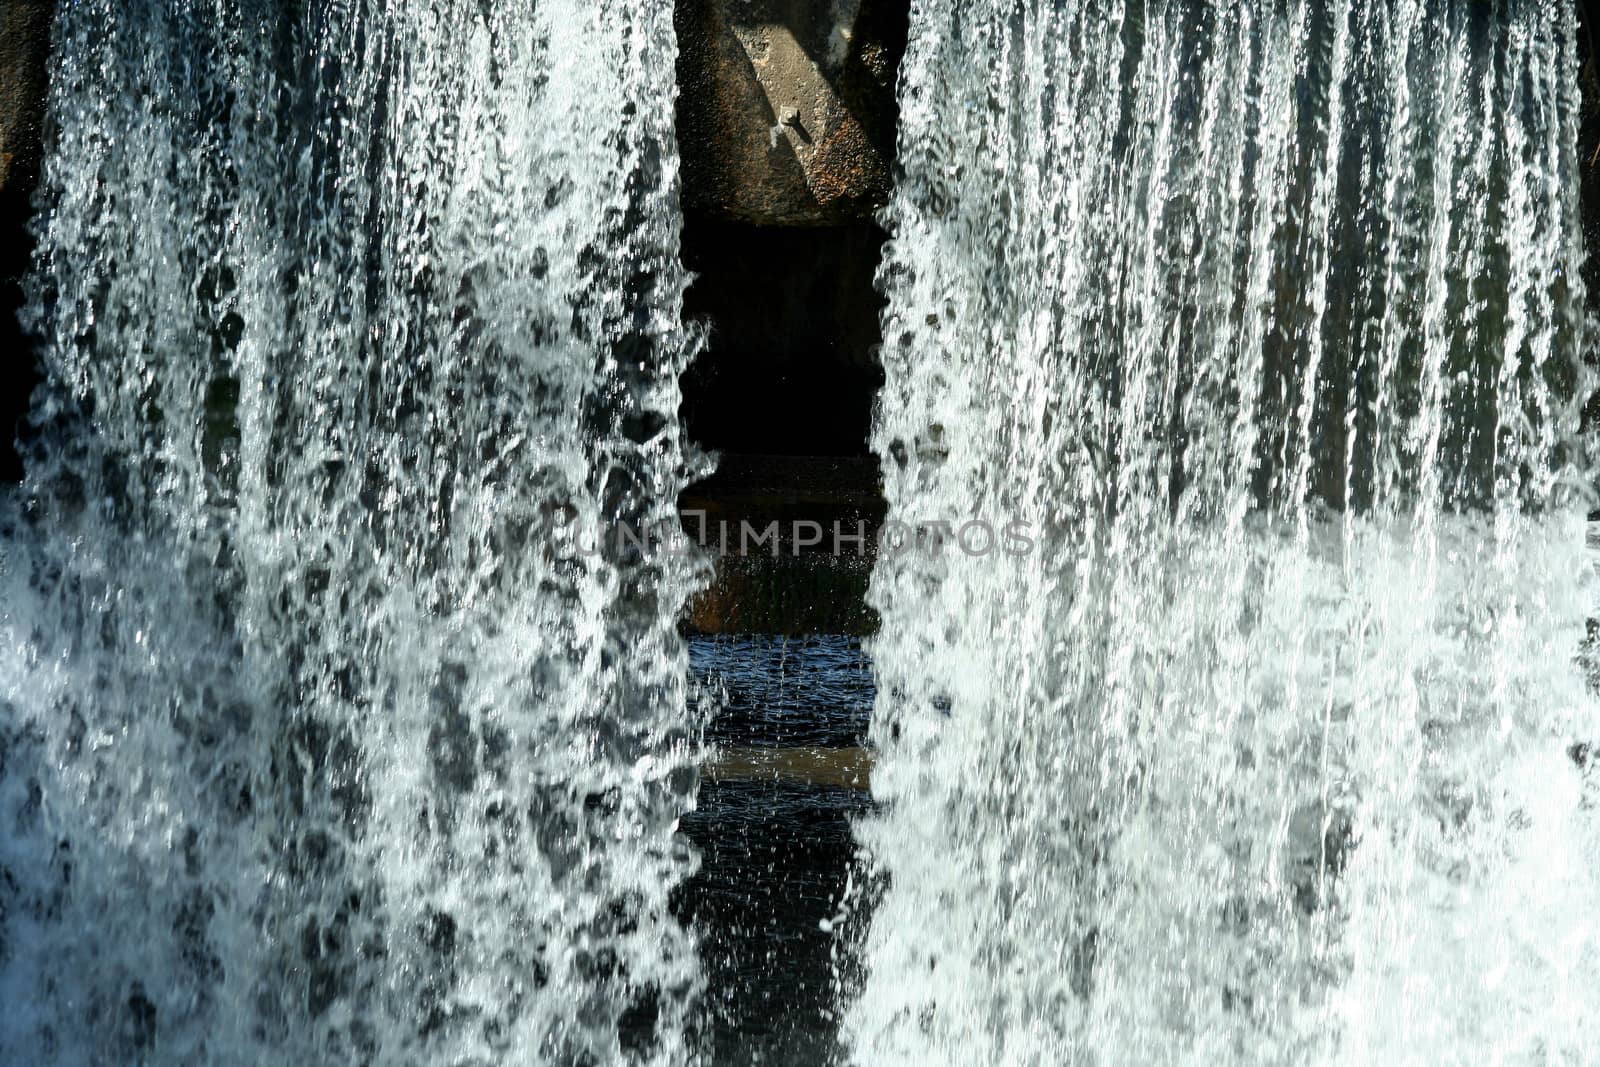 Flowing waterfall by njnightsky